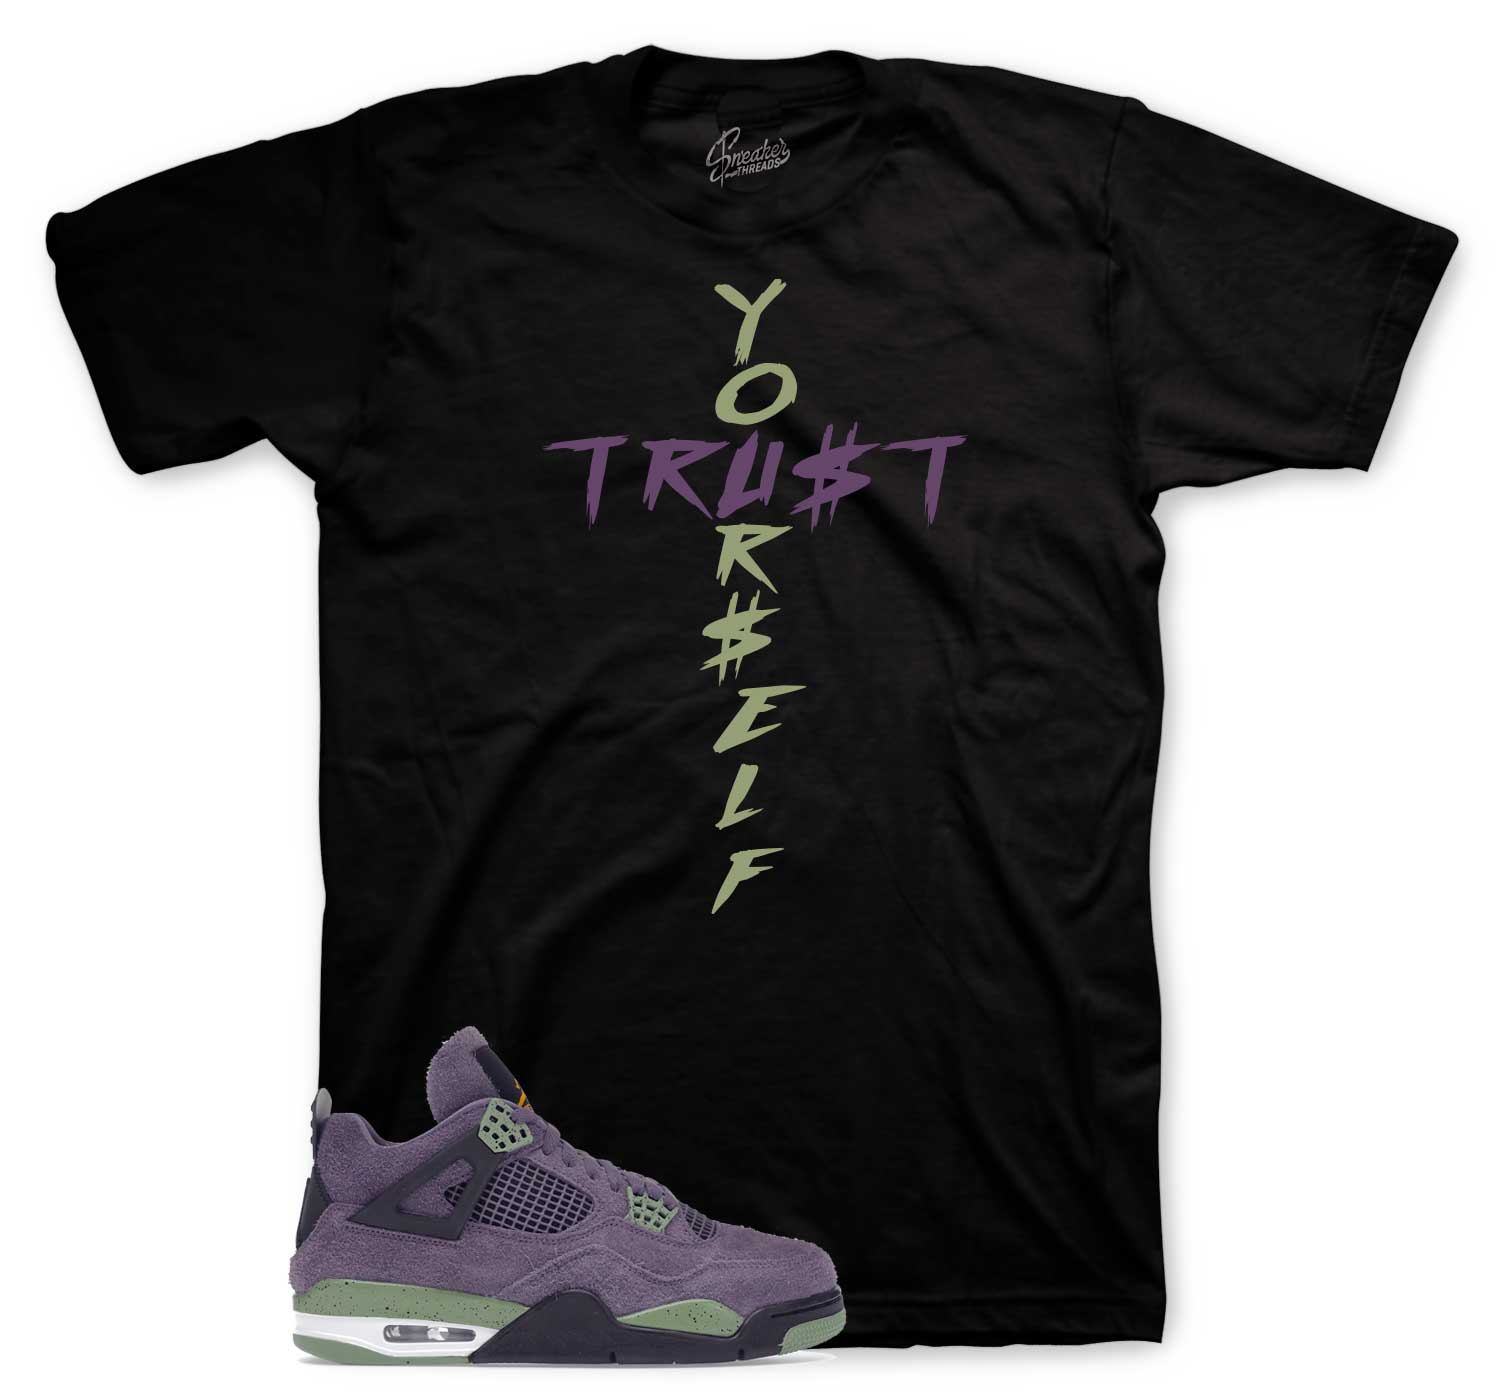 Retro 4 Canyon Purple Shirt - Trust Yourself - Black